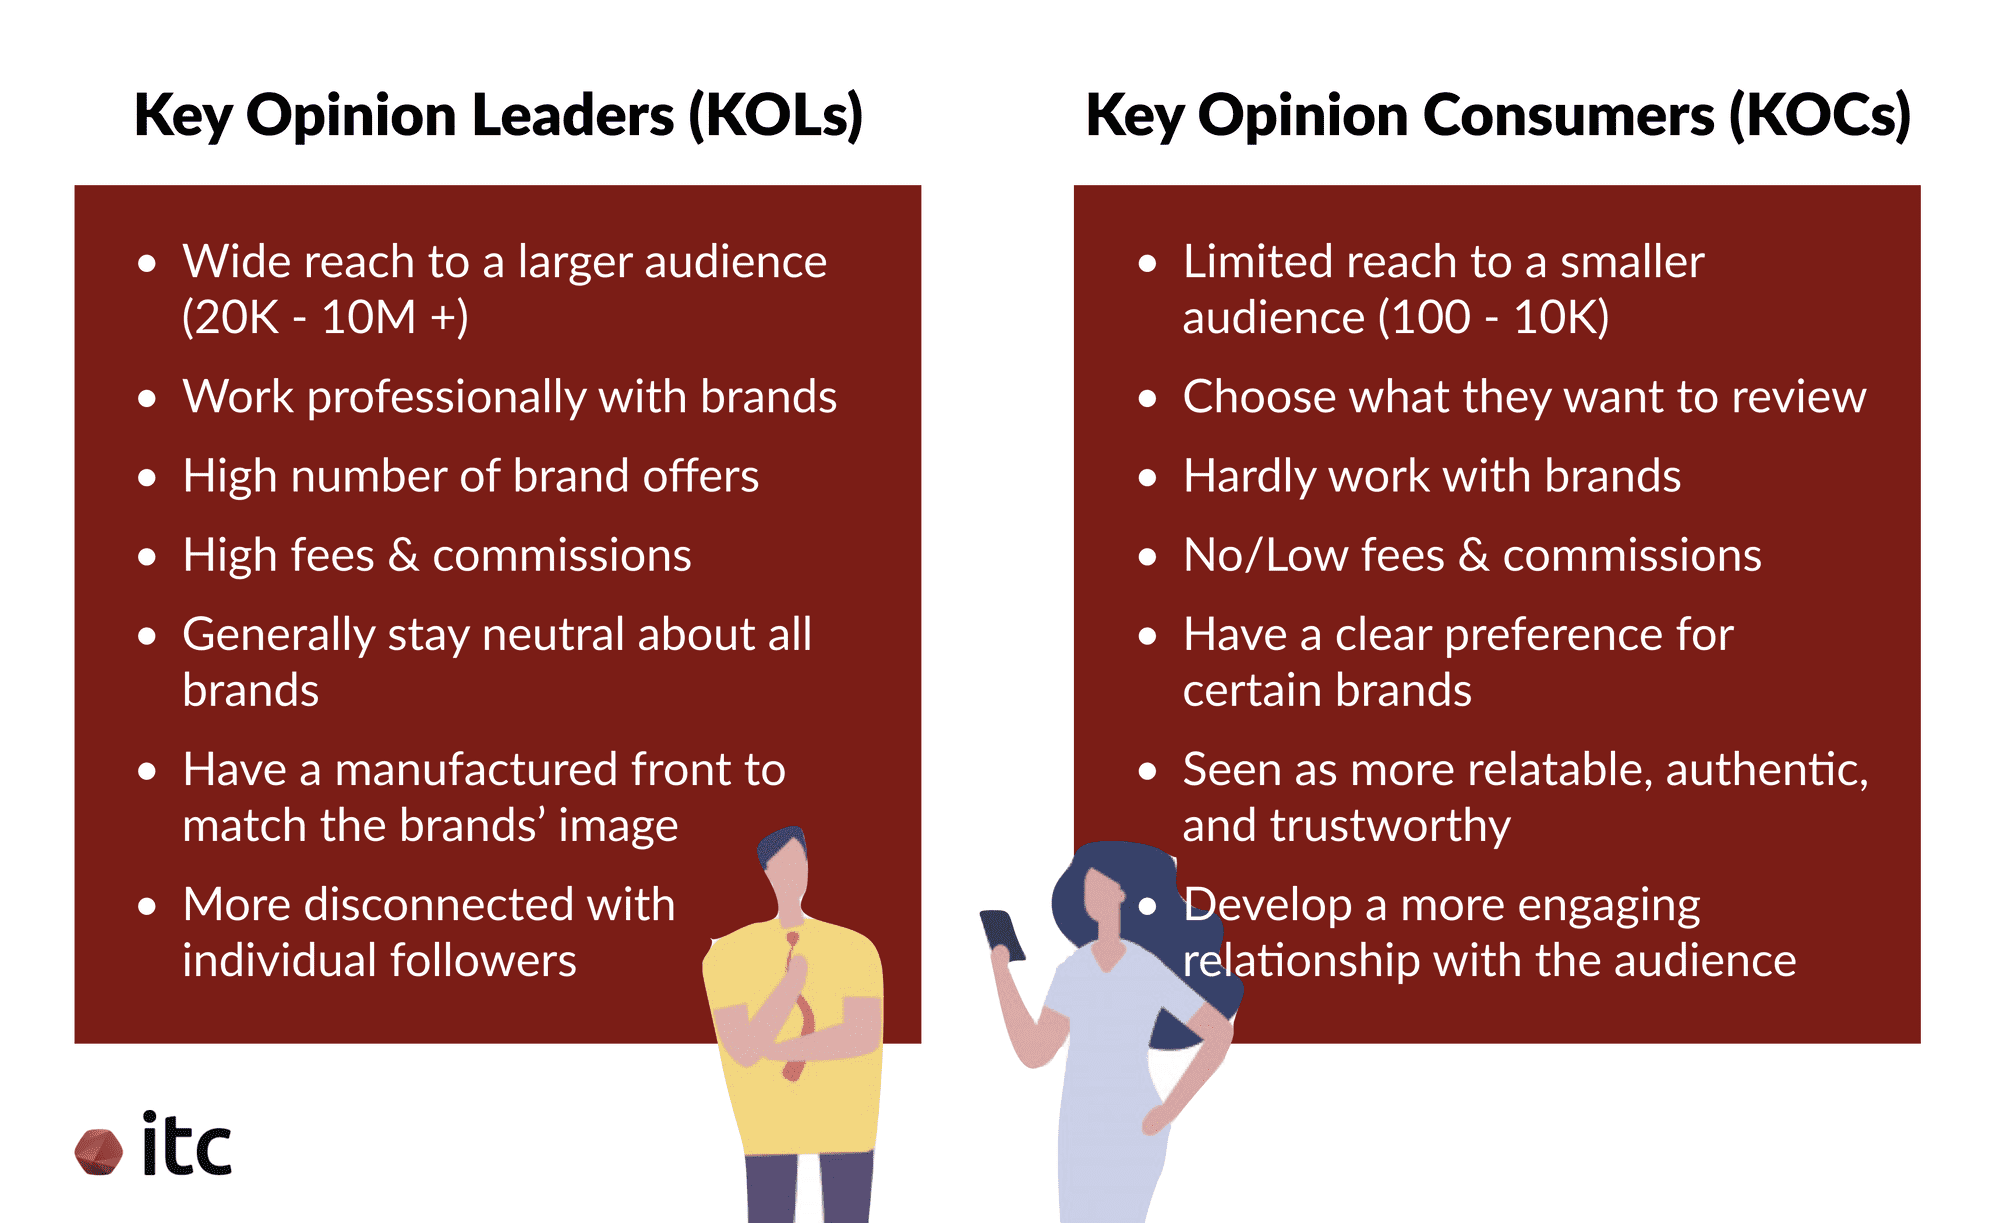 A comparison of Key Opinion Leaders (KOLs) vs Key Opinion Consumers (KOCs)